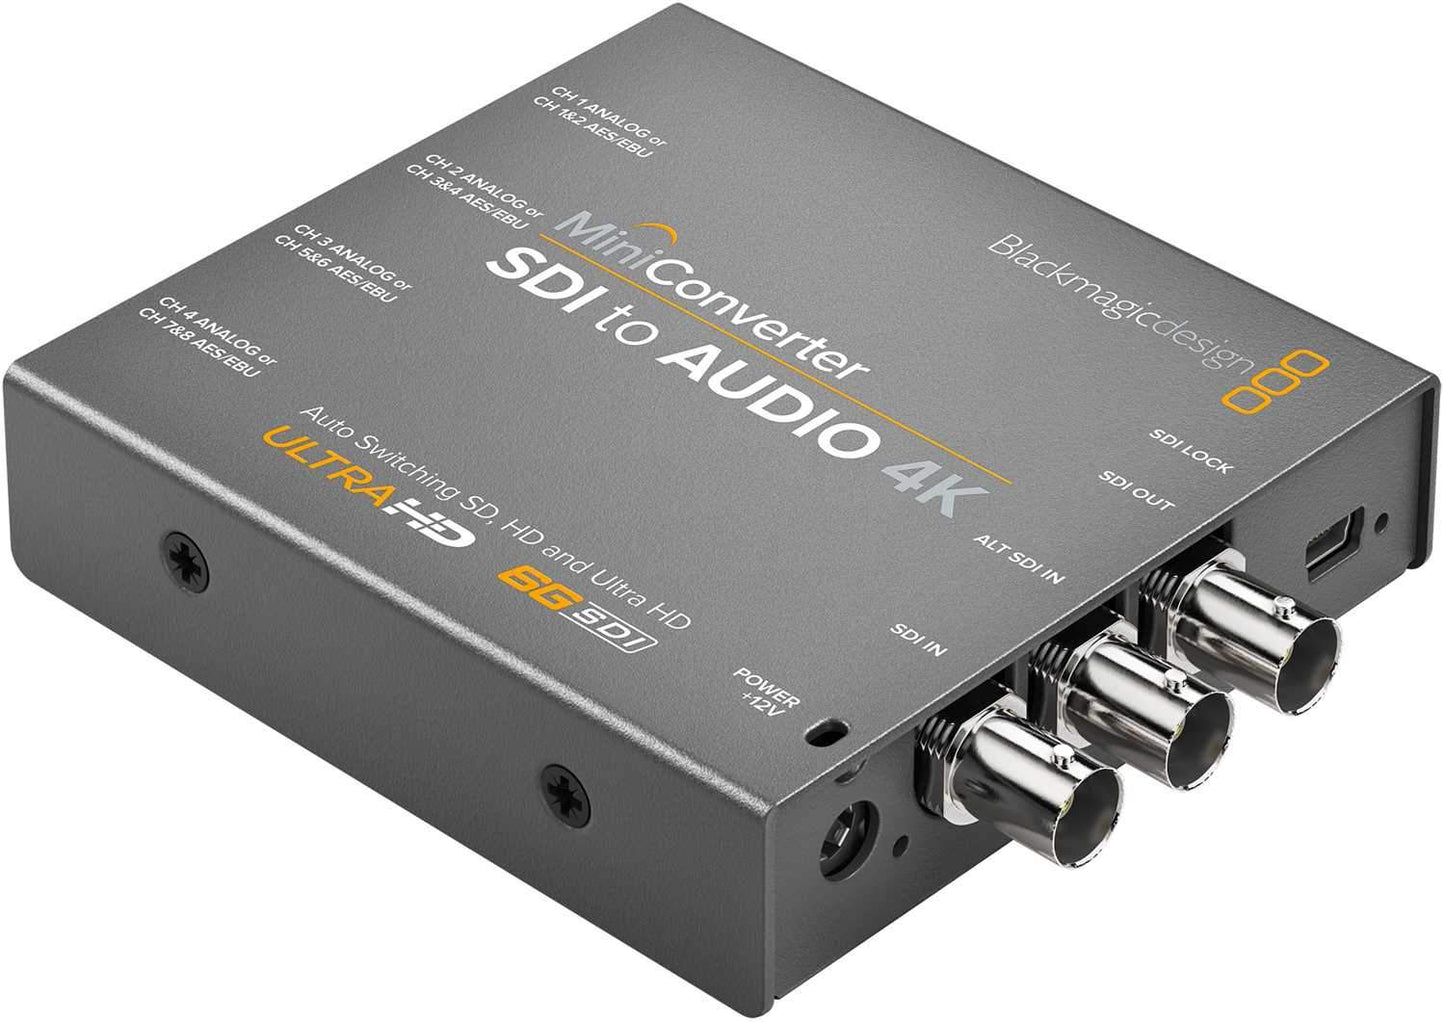 Blackmagic Design Mini Converter SDI to Audio 4K - ProSound and Stage Lighting